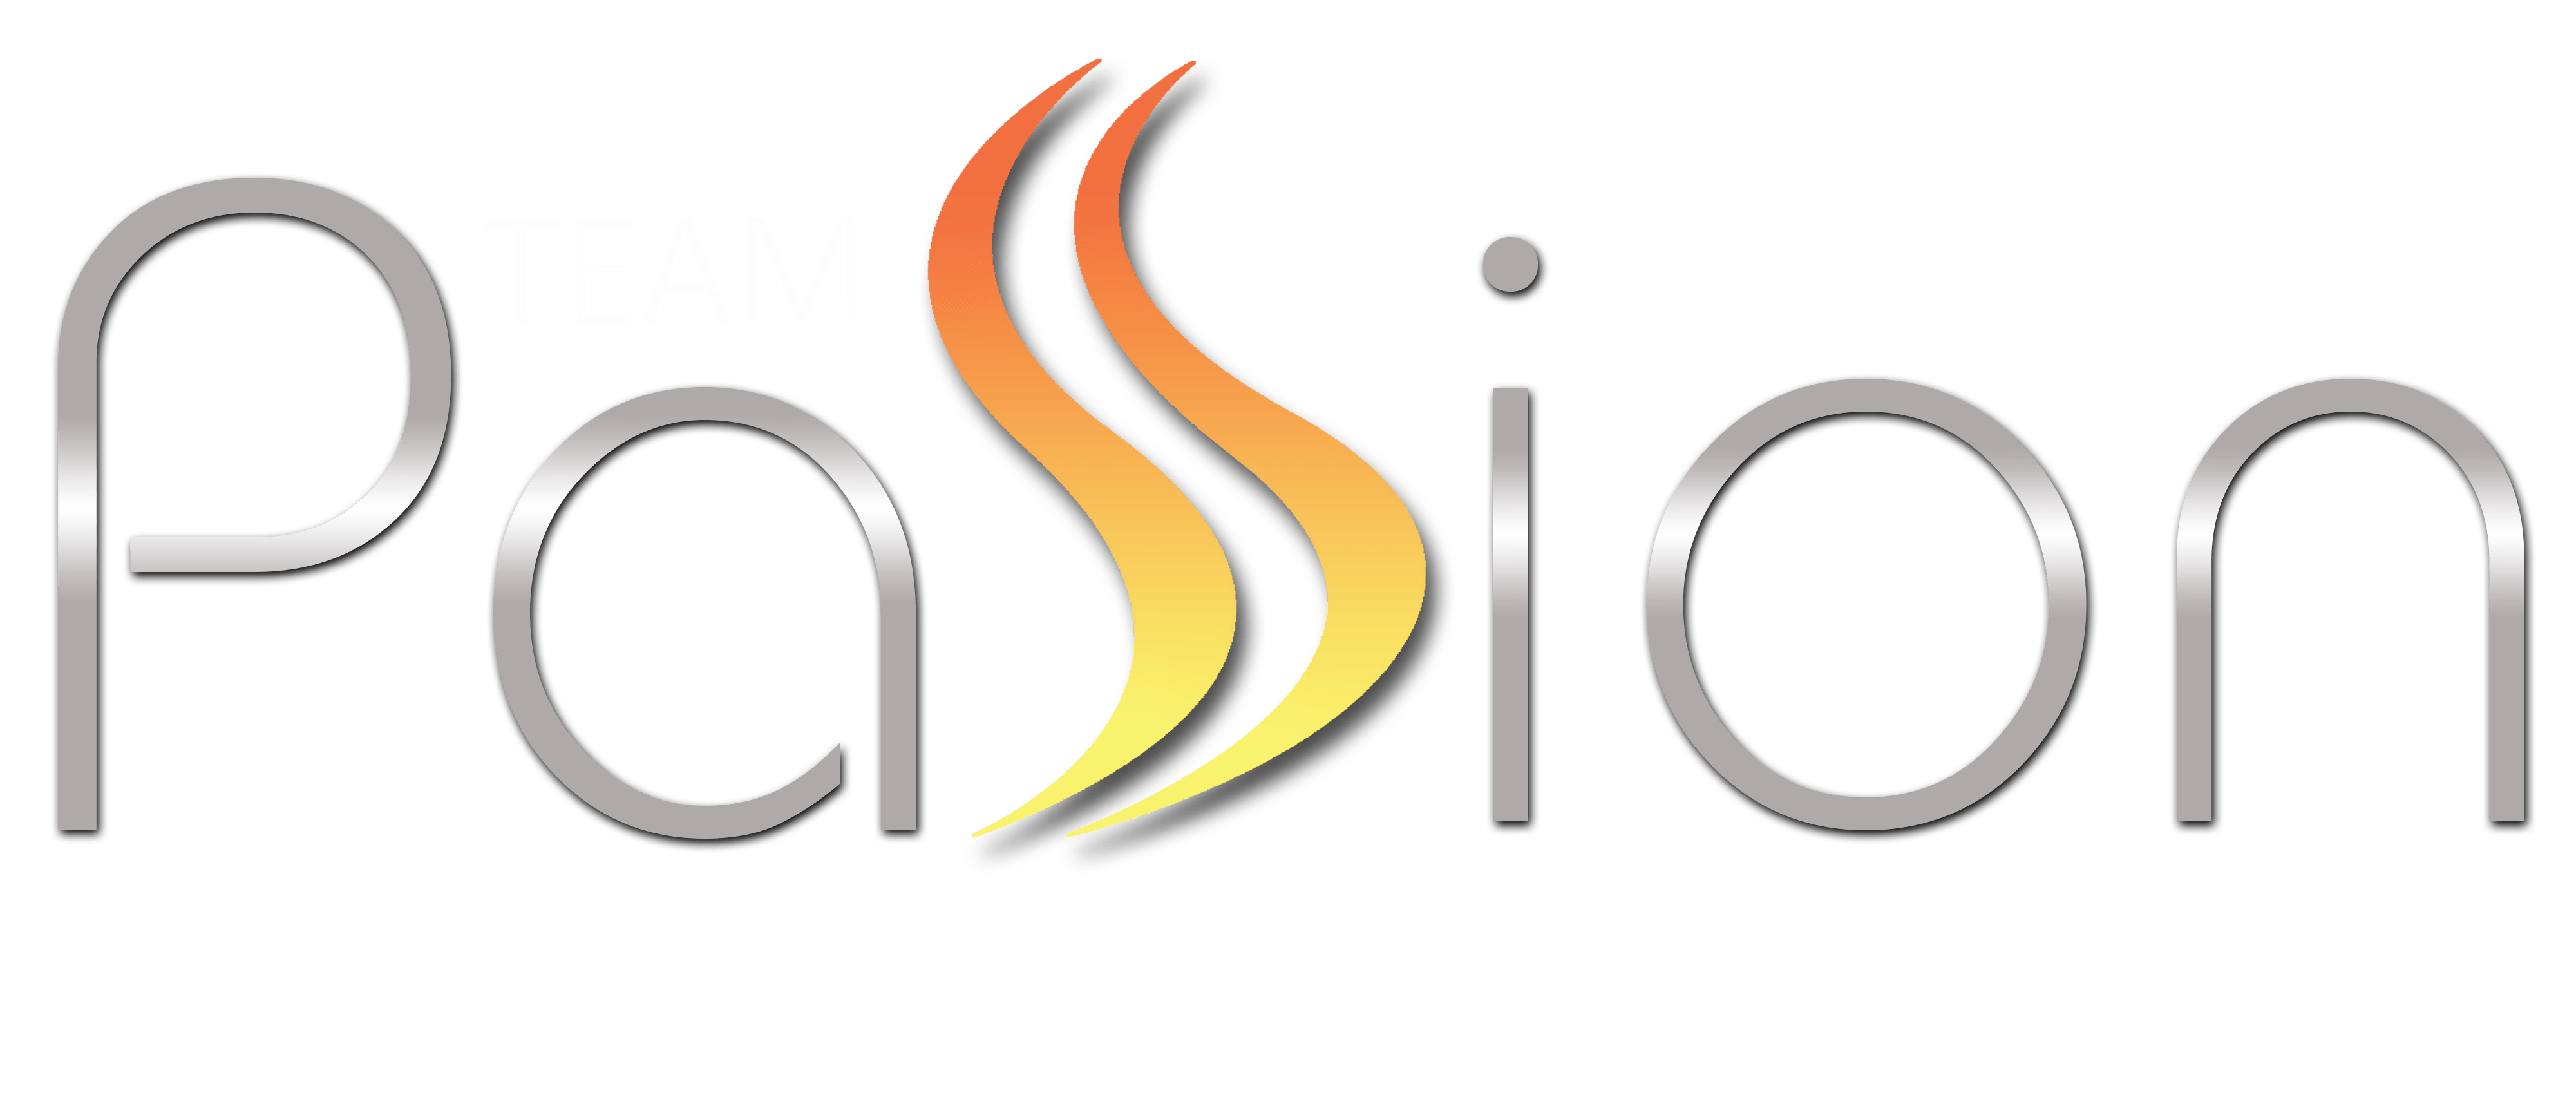 Passion Logo - Passion Logos